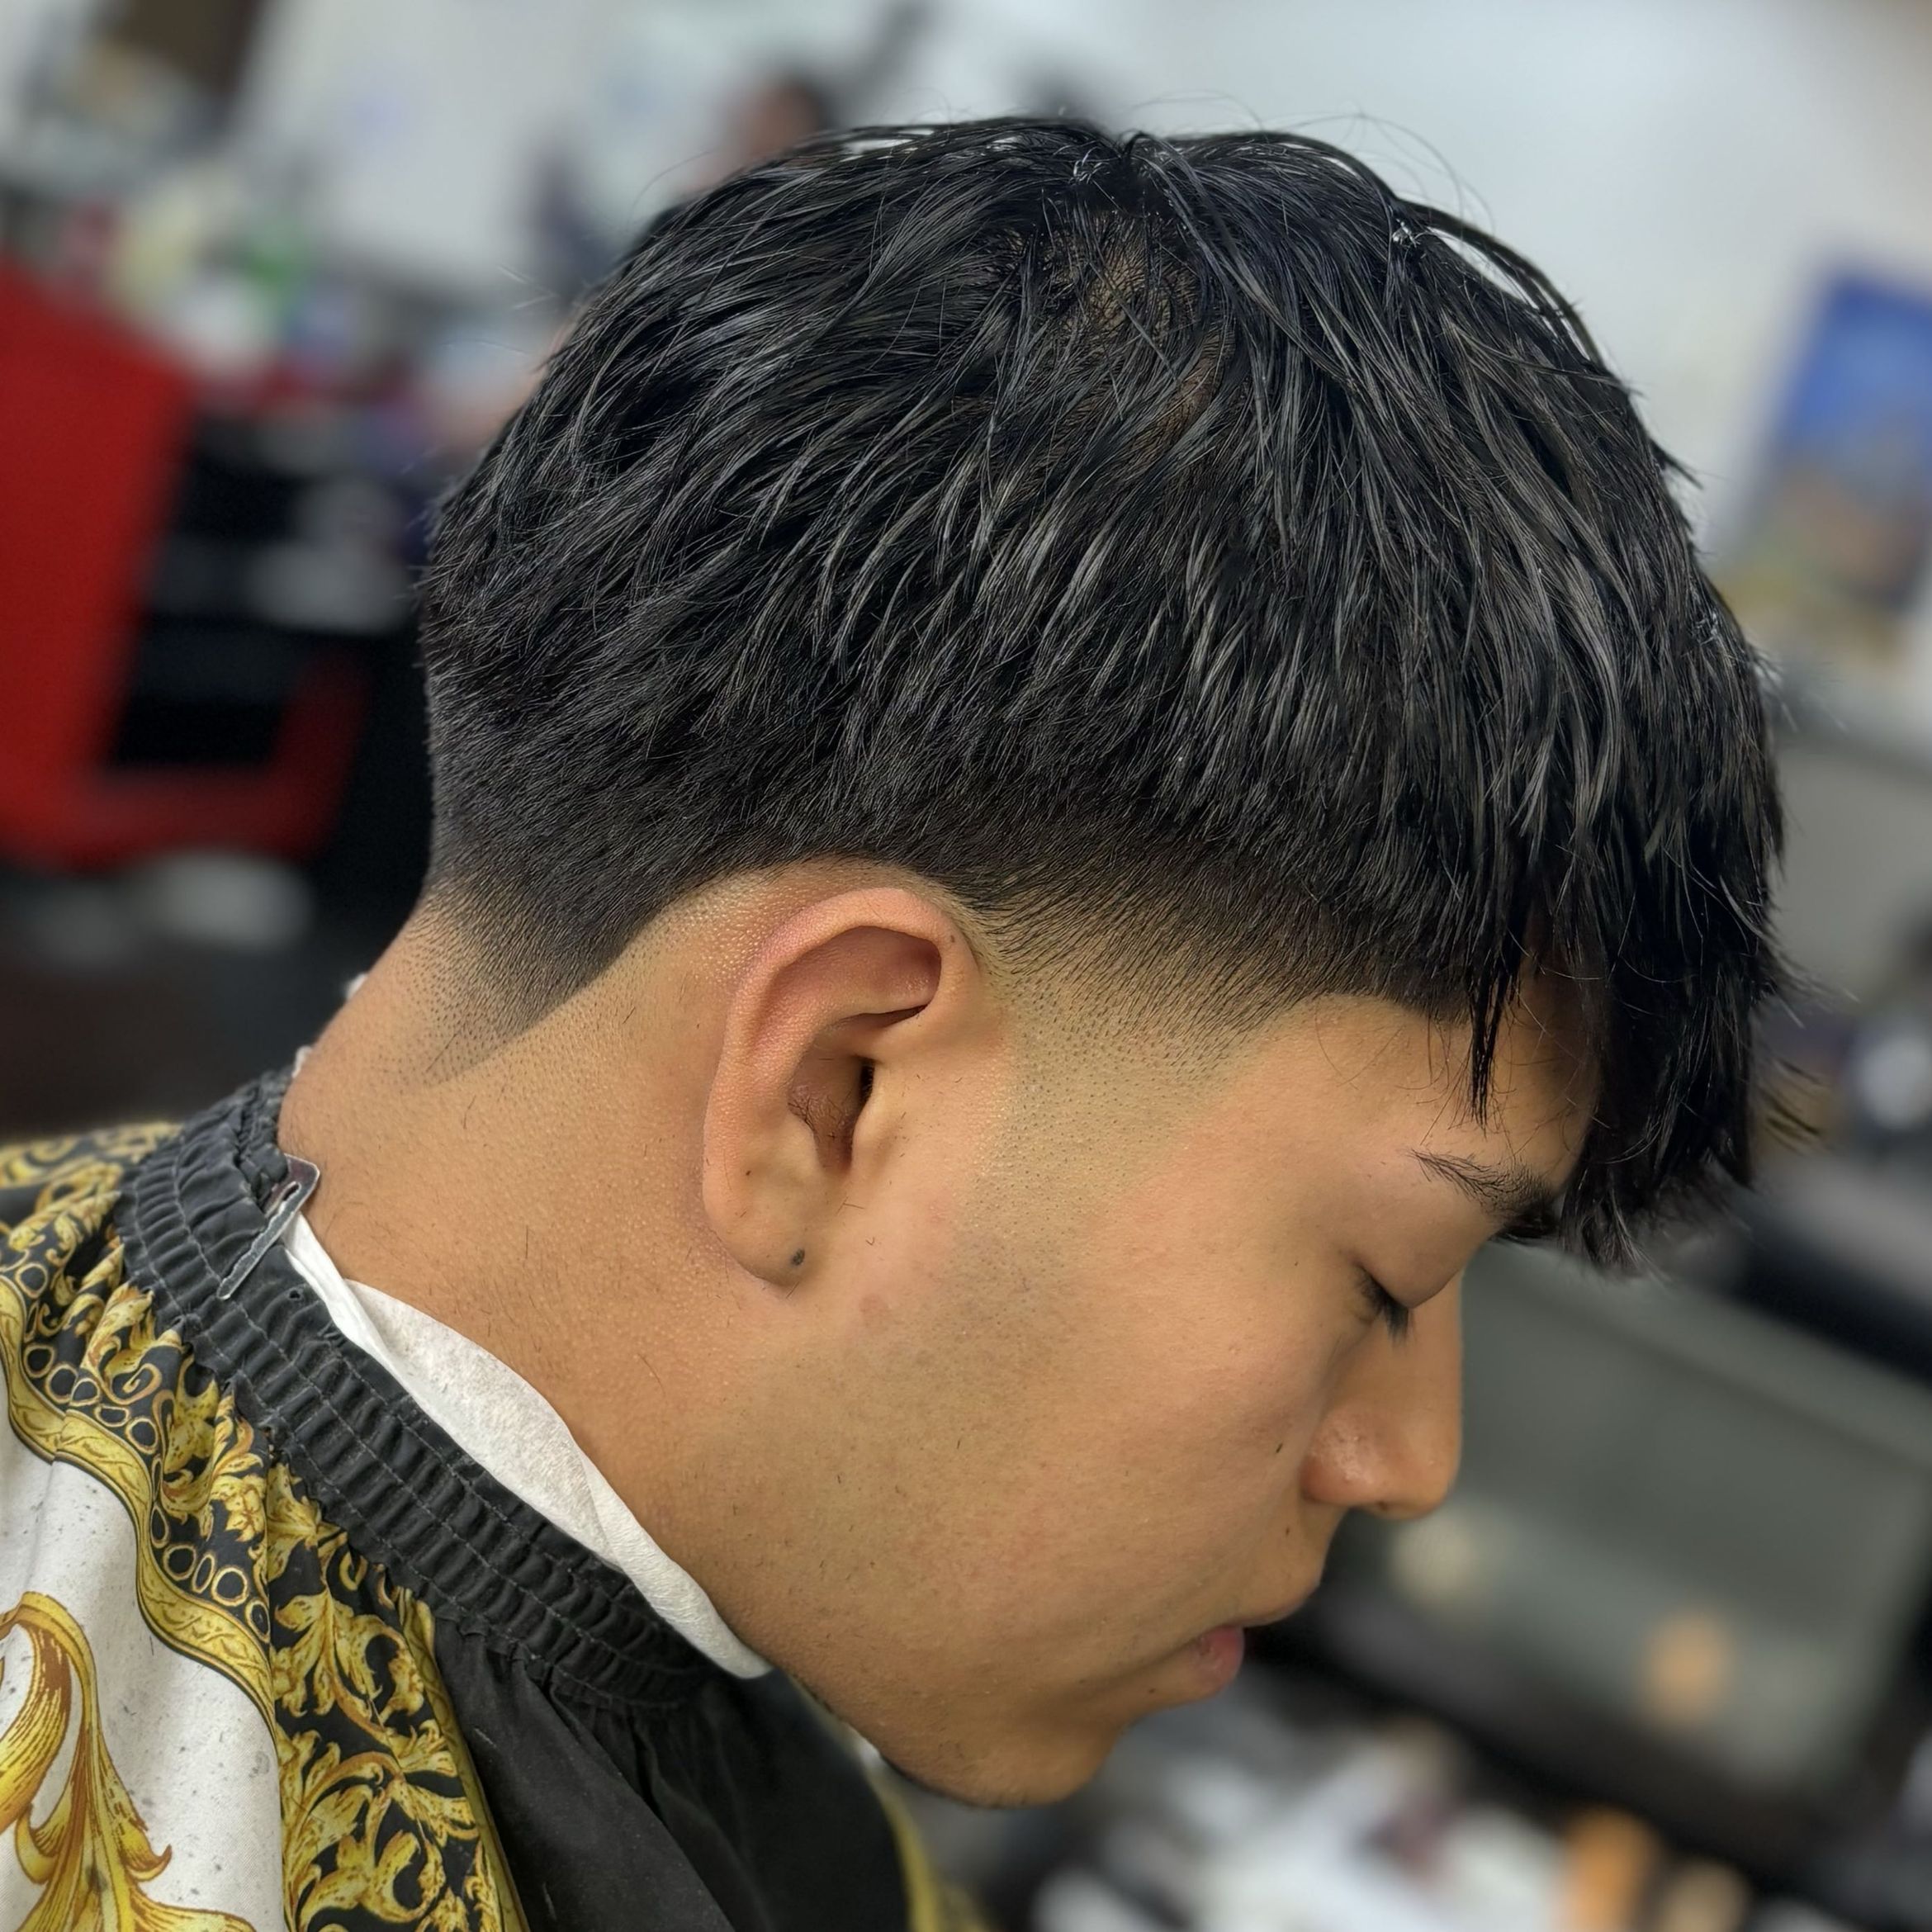 Corte/Haircut portfolio